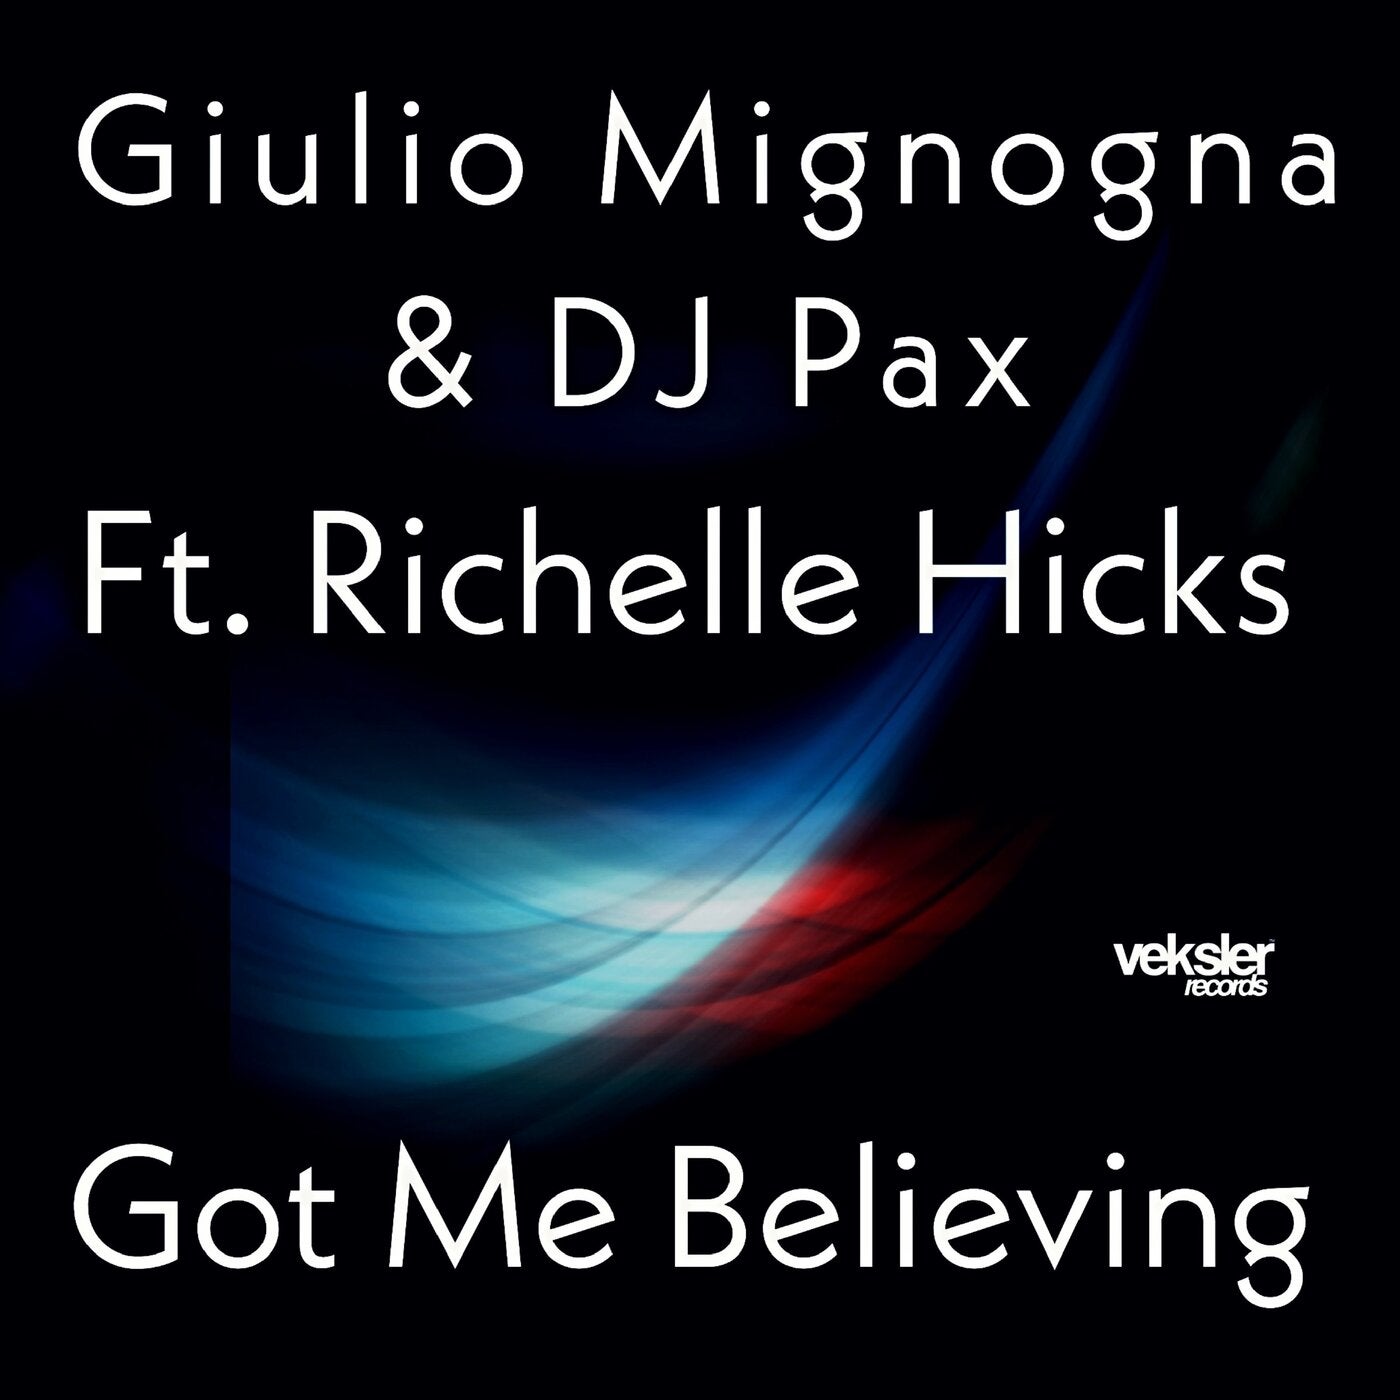 Giulio Mignogna & DJ Pax - Got Me Believing (feat. Richelle Hicks) [Veksler Records]